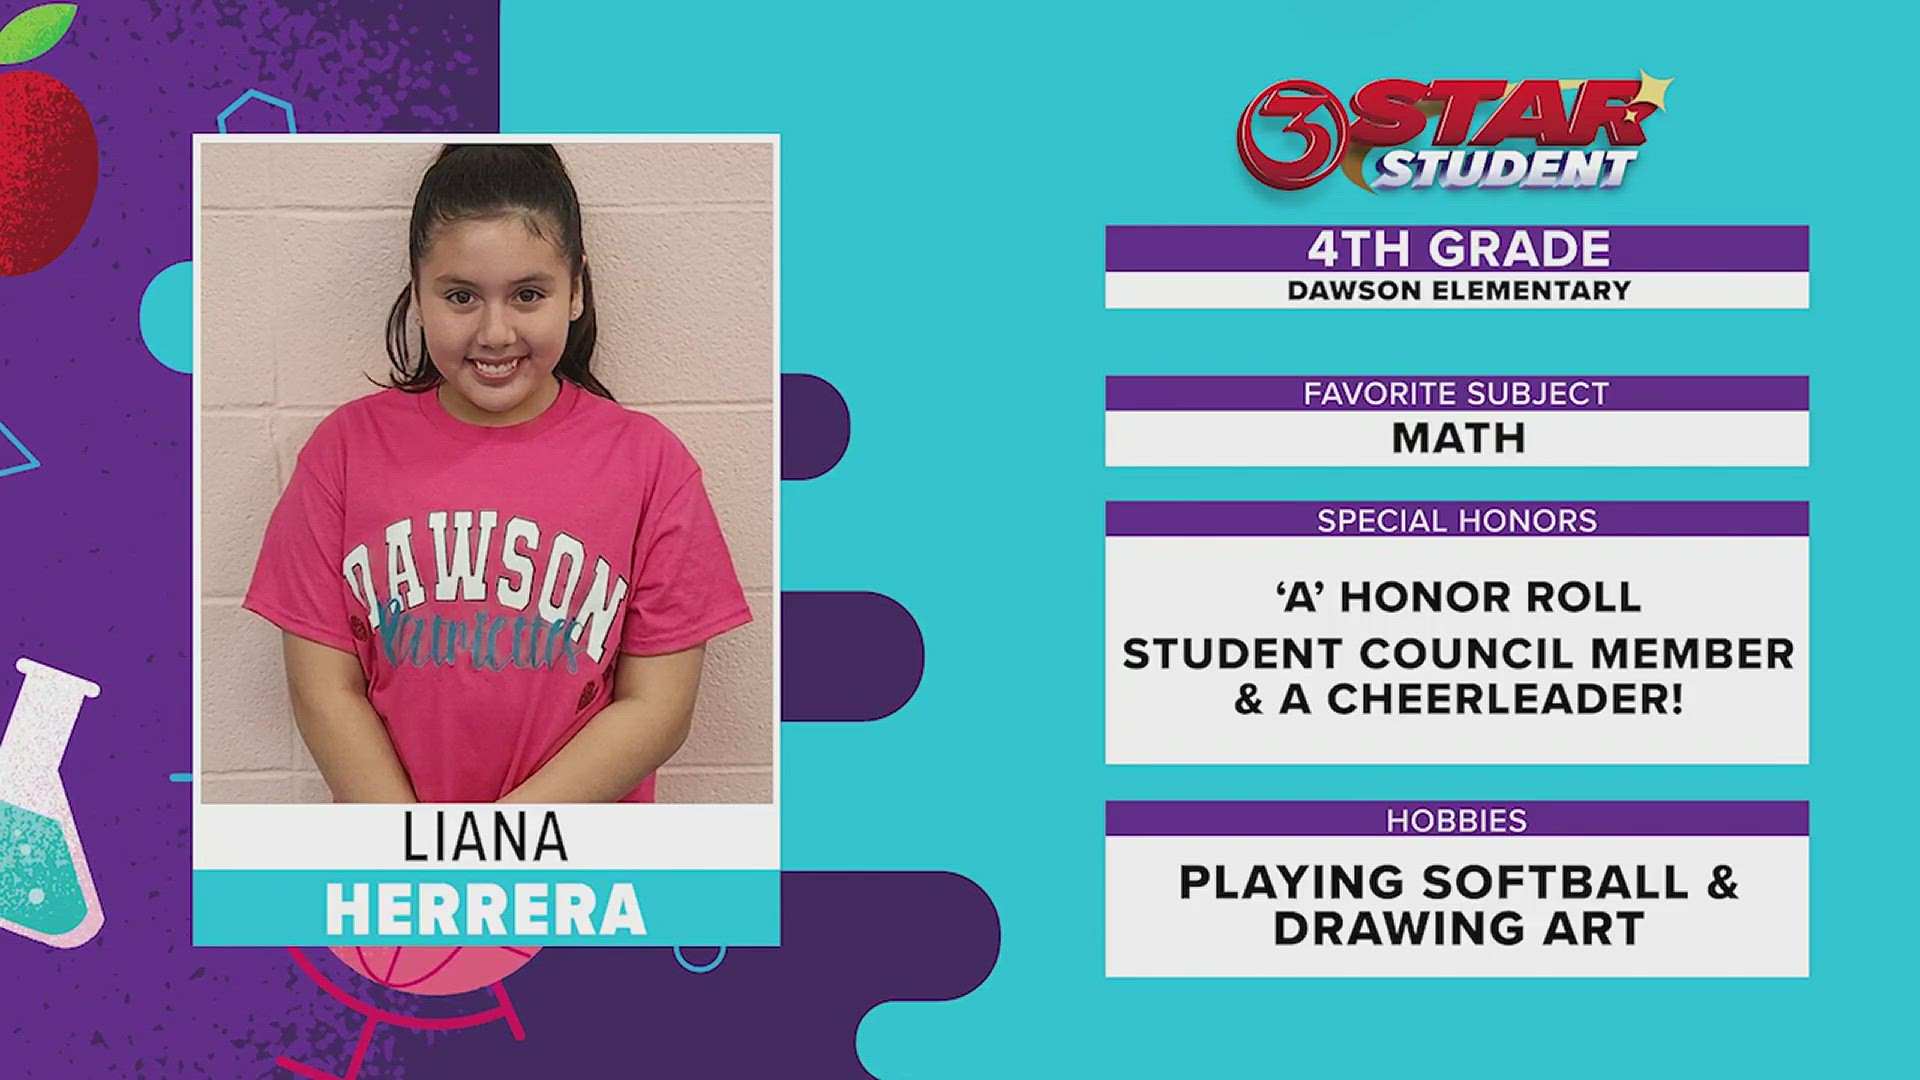 Congratulations, Liana, and keep up the hard work!